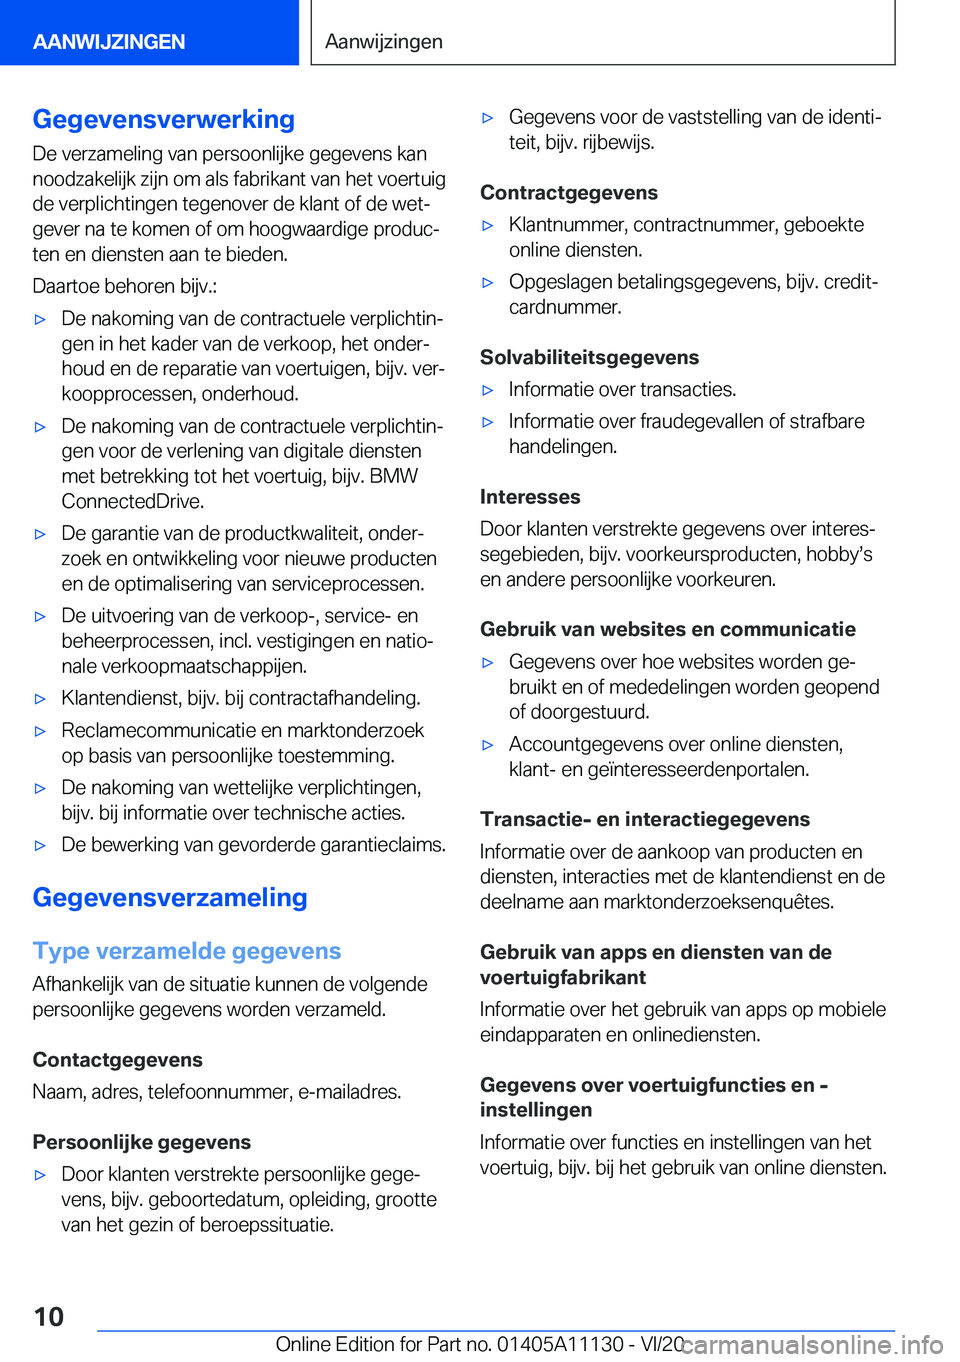 BMW 8 SERIES COUPE 2021  Instructieboekjes (in Dutch) �G�e�g�e�v�e�n�s�v�e�r�w�e�r�k�i�n�g
�D�e��v�e�r�z�a�m�e�l�i�n�g��v�a�n��p�e�r�s�o�o�n�l�i�j�k�e��g�e�g�e�v�e�n�s��k�a�n
�n�o�o�d�z�a�k�e�l�i�j�k��z�i�j�n��o�m��a�l�s��f�a�b�r�i�k�a�n�t��v�a